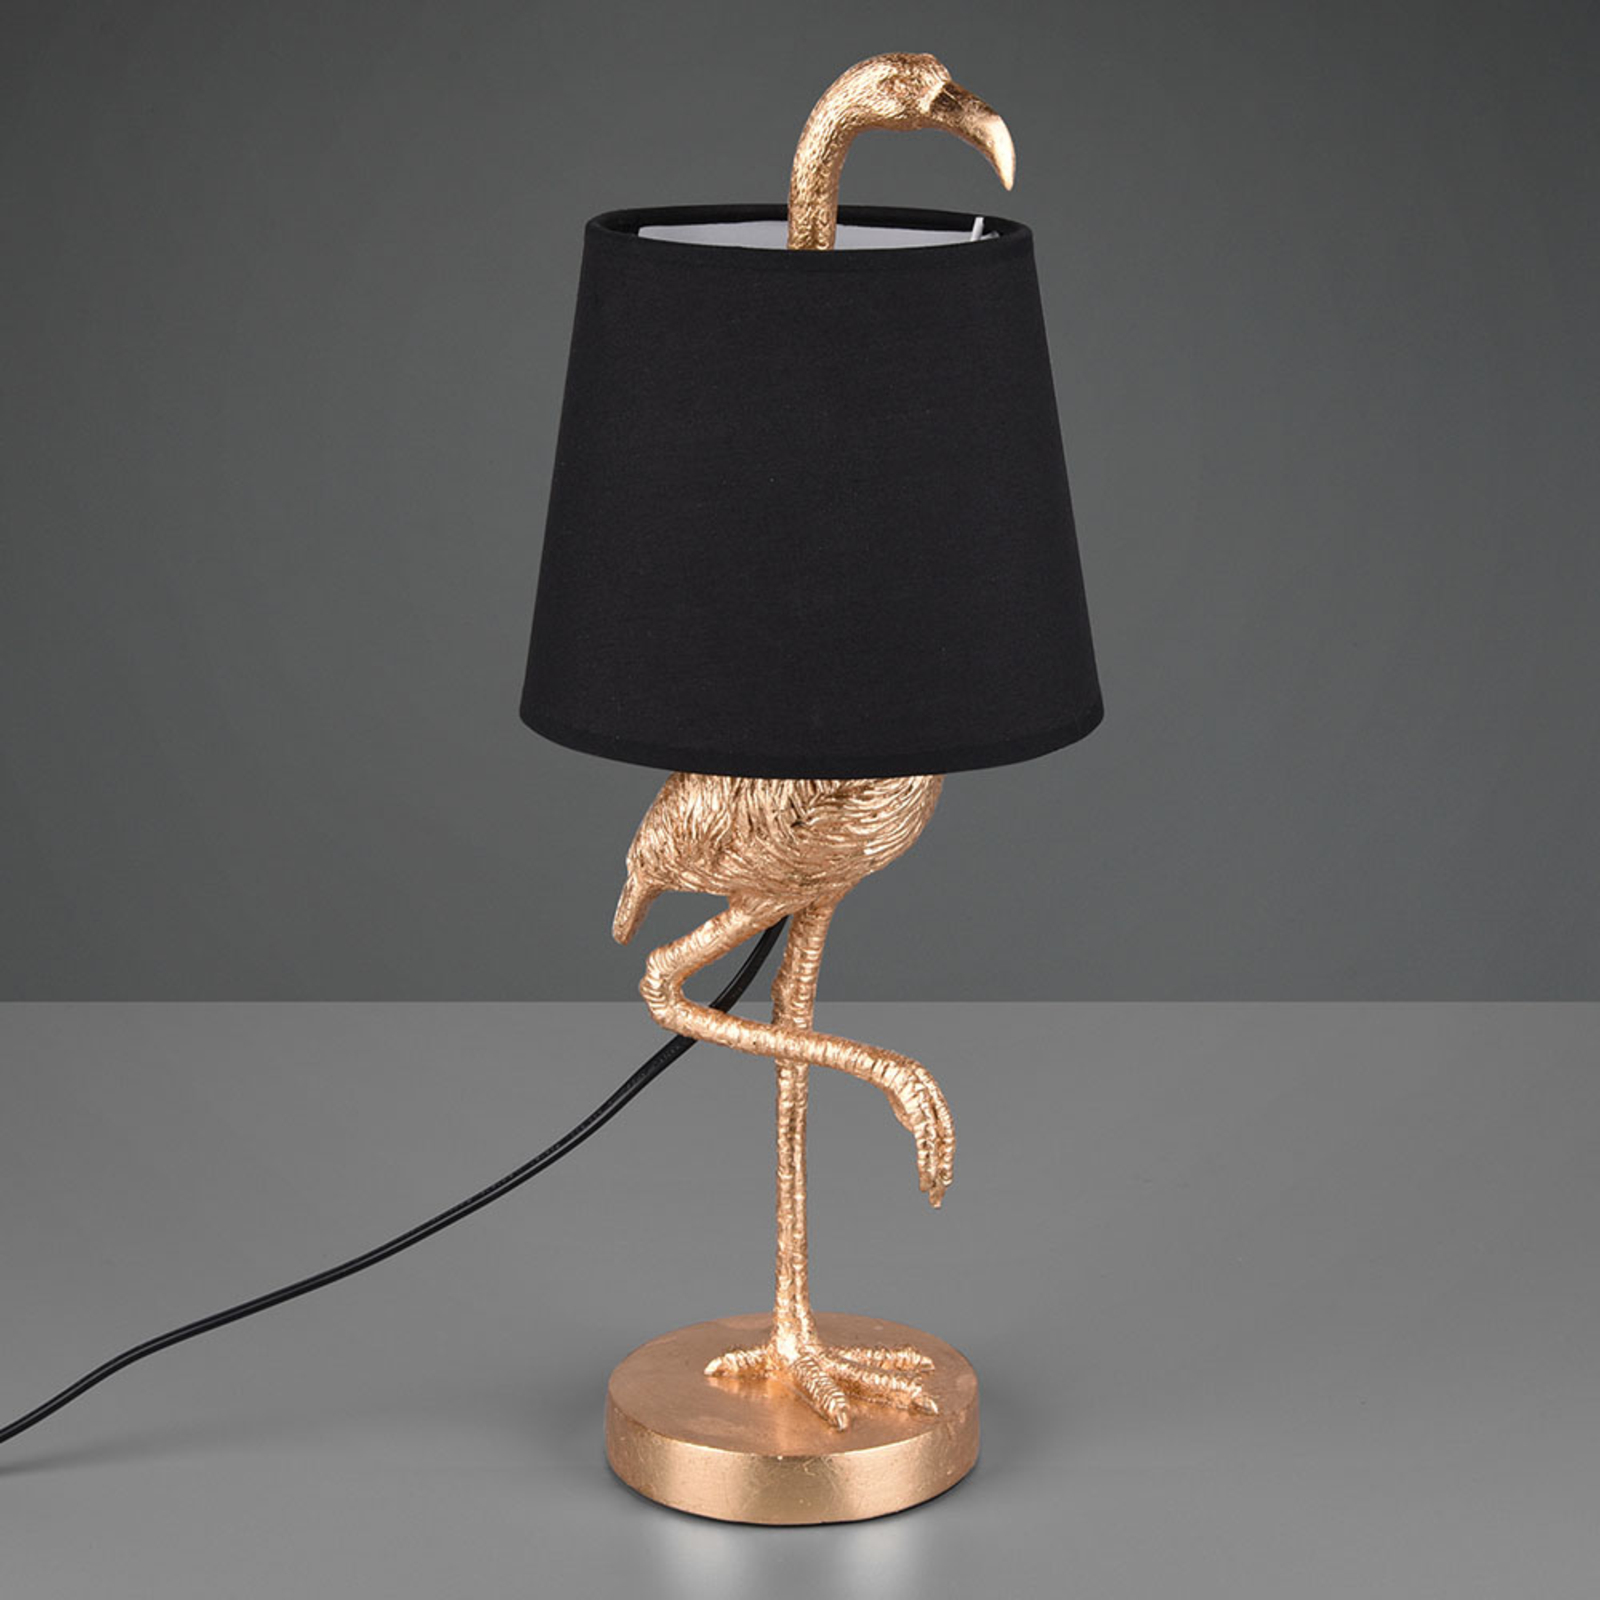 Tafellamp Lola met flamingo-figuur, zwart/goud